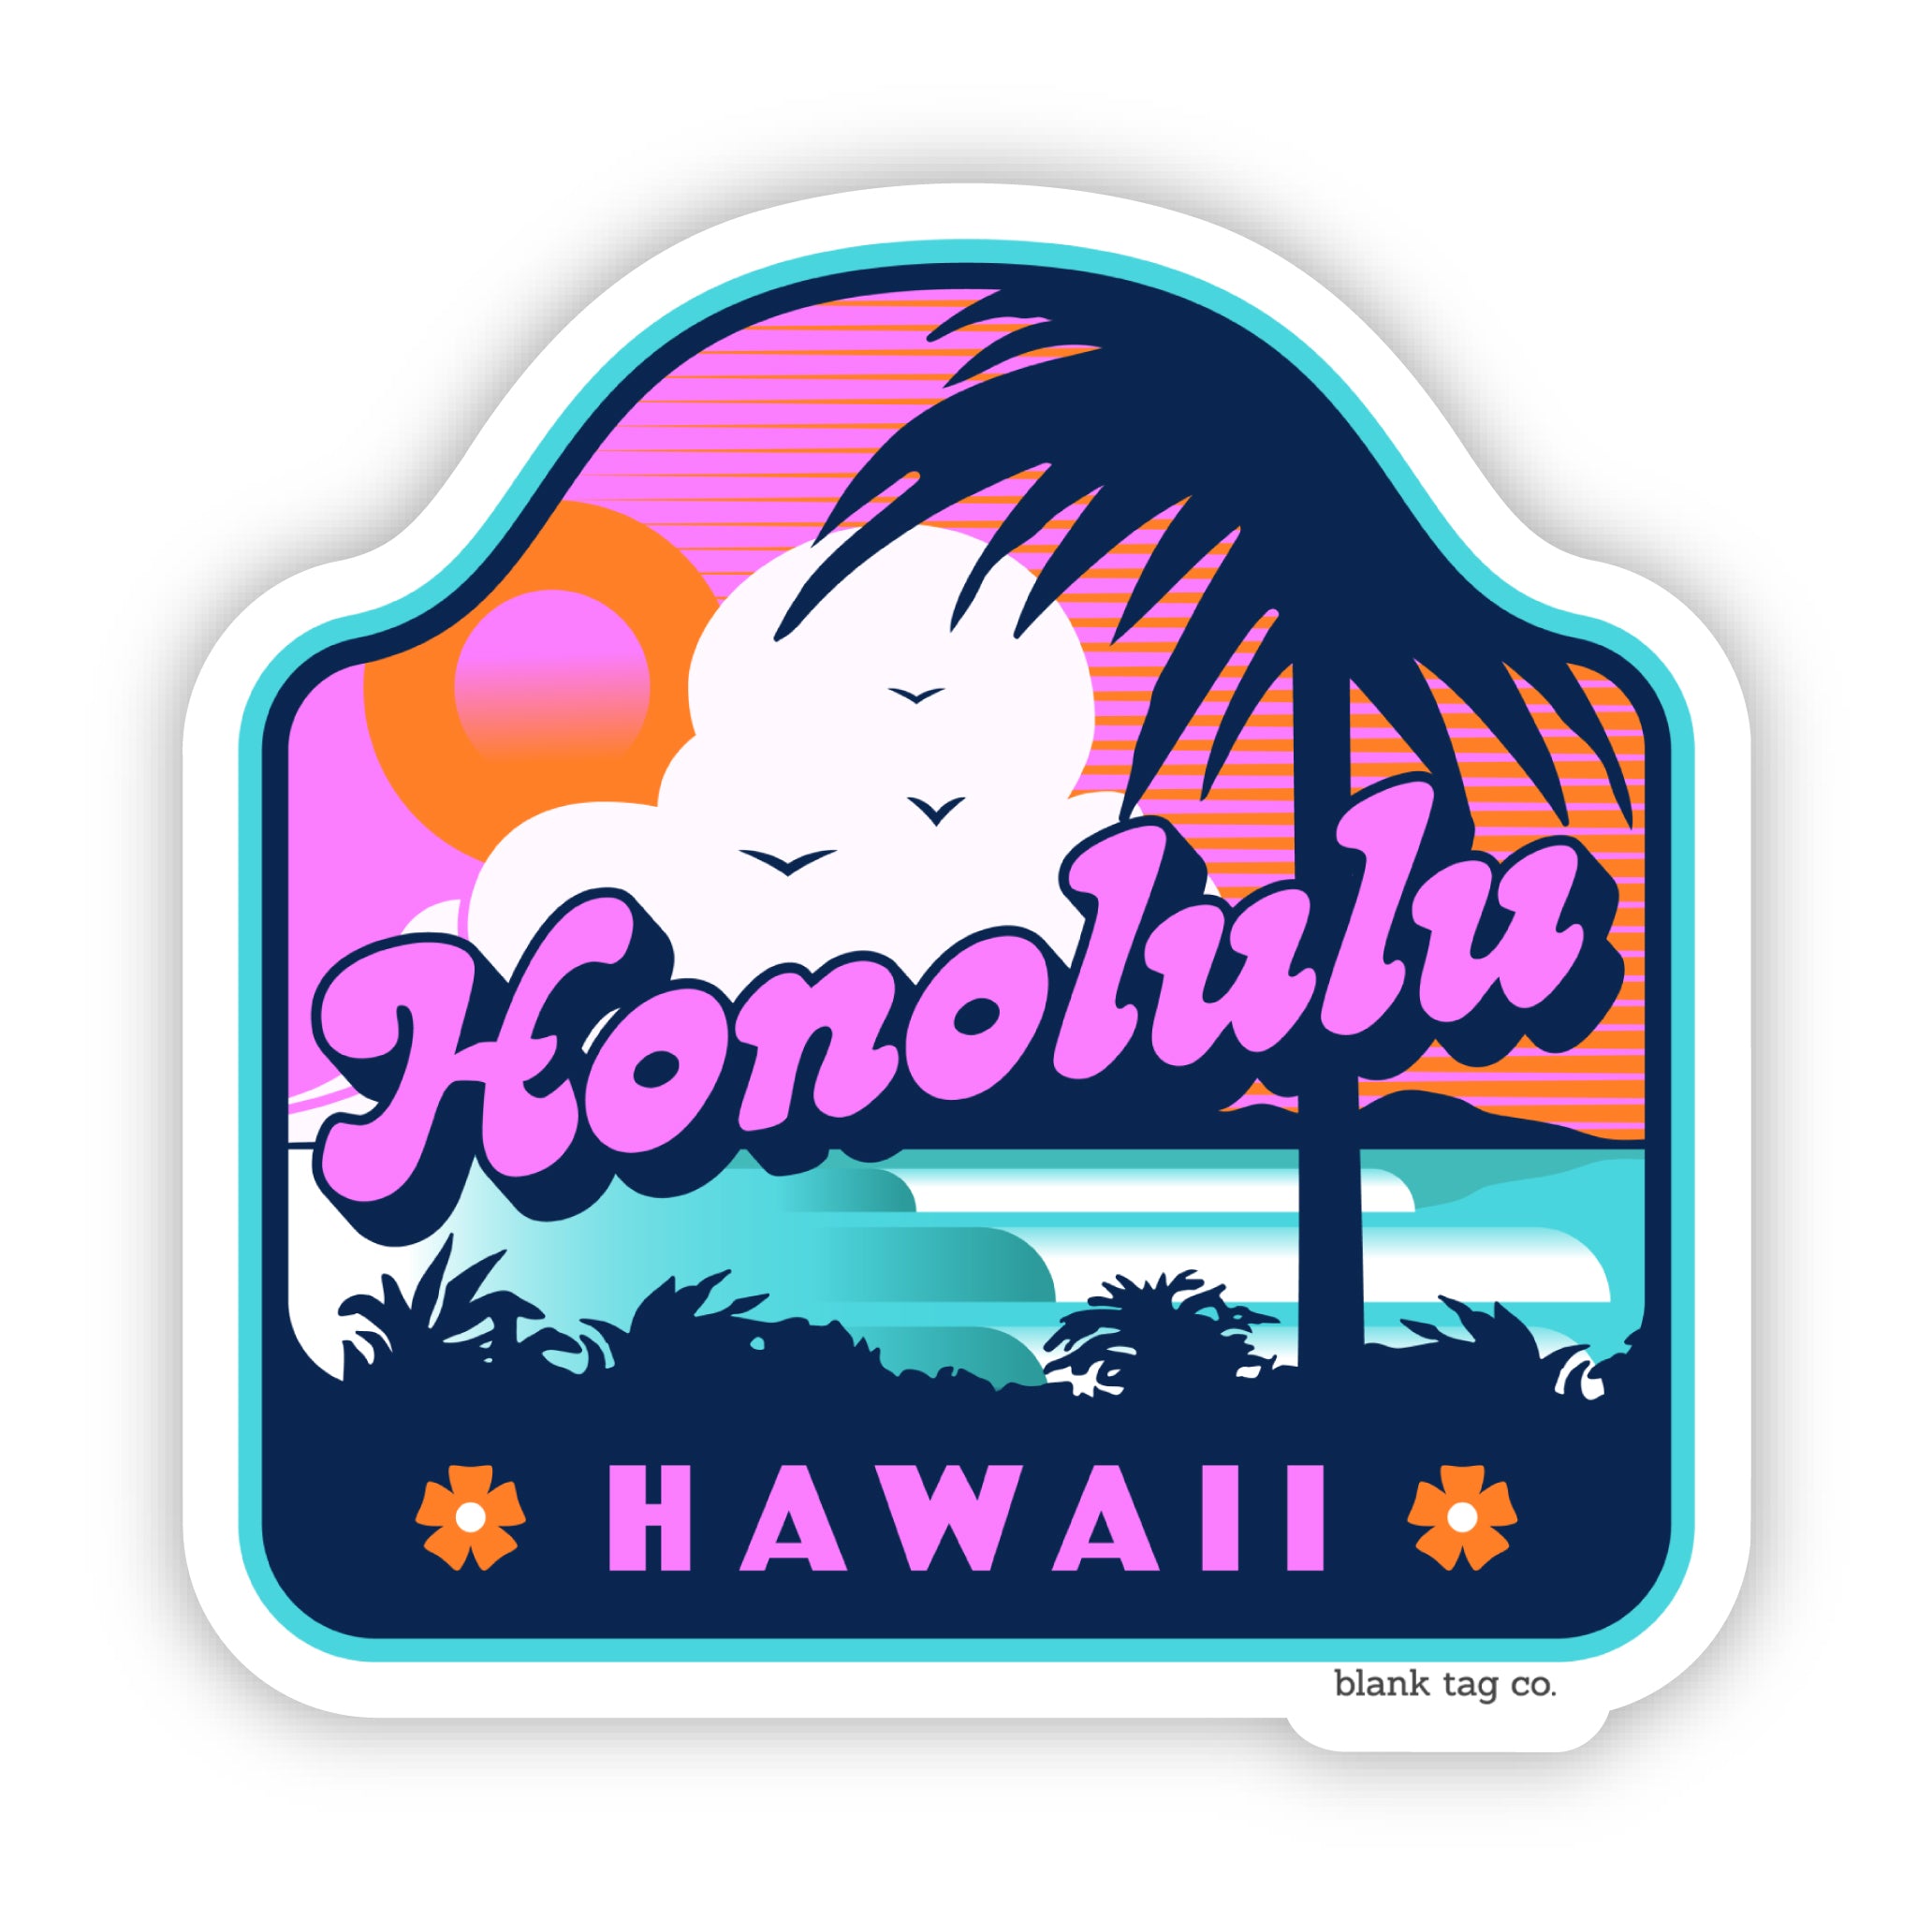 The Honolulu City Badge Sticker